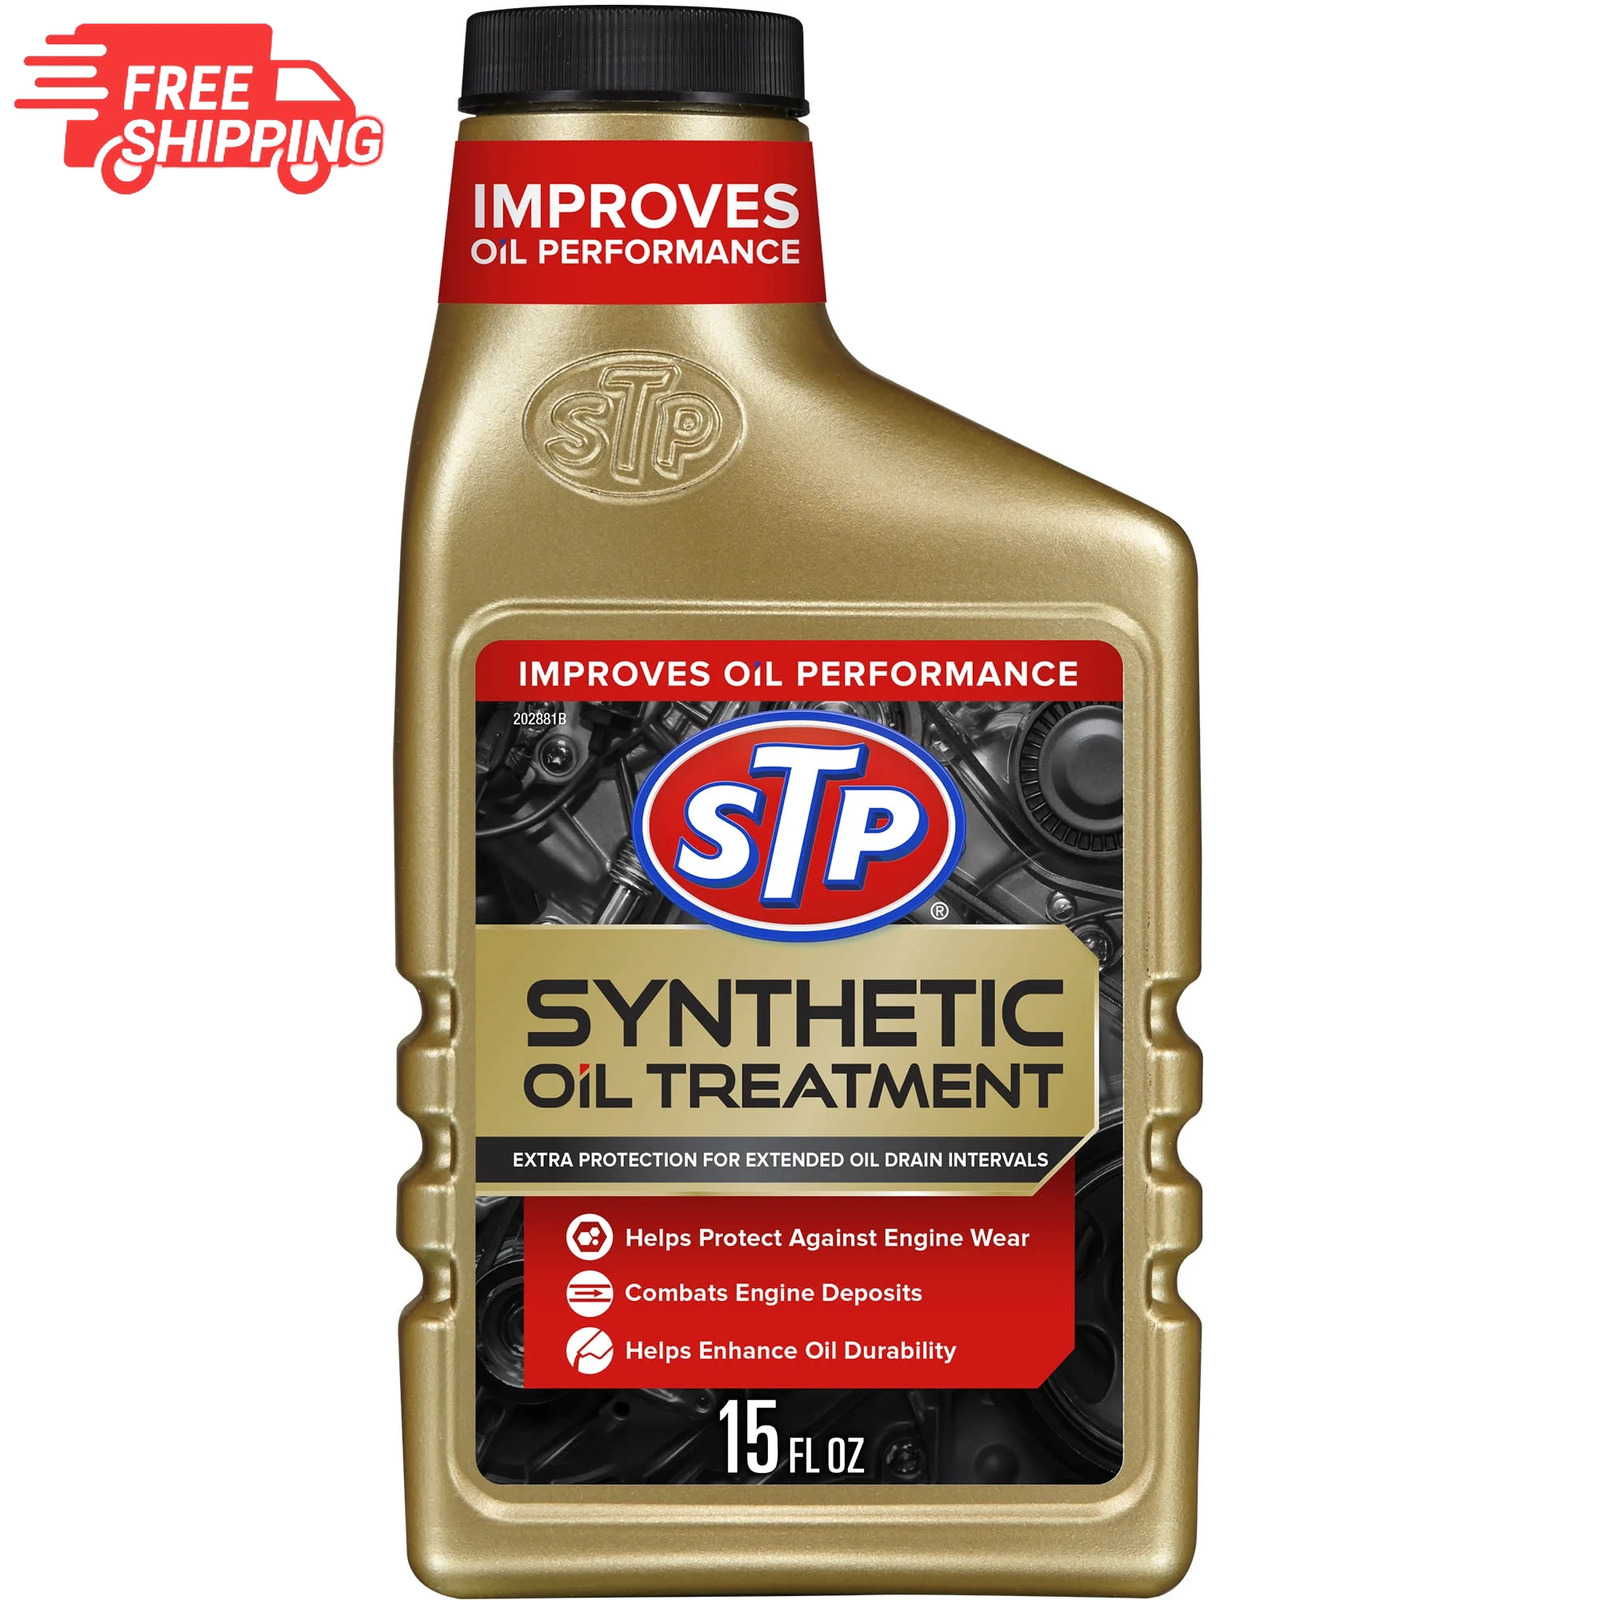 Synthetic Automotive Oil Treatment - 15 FL OZ Bottle